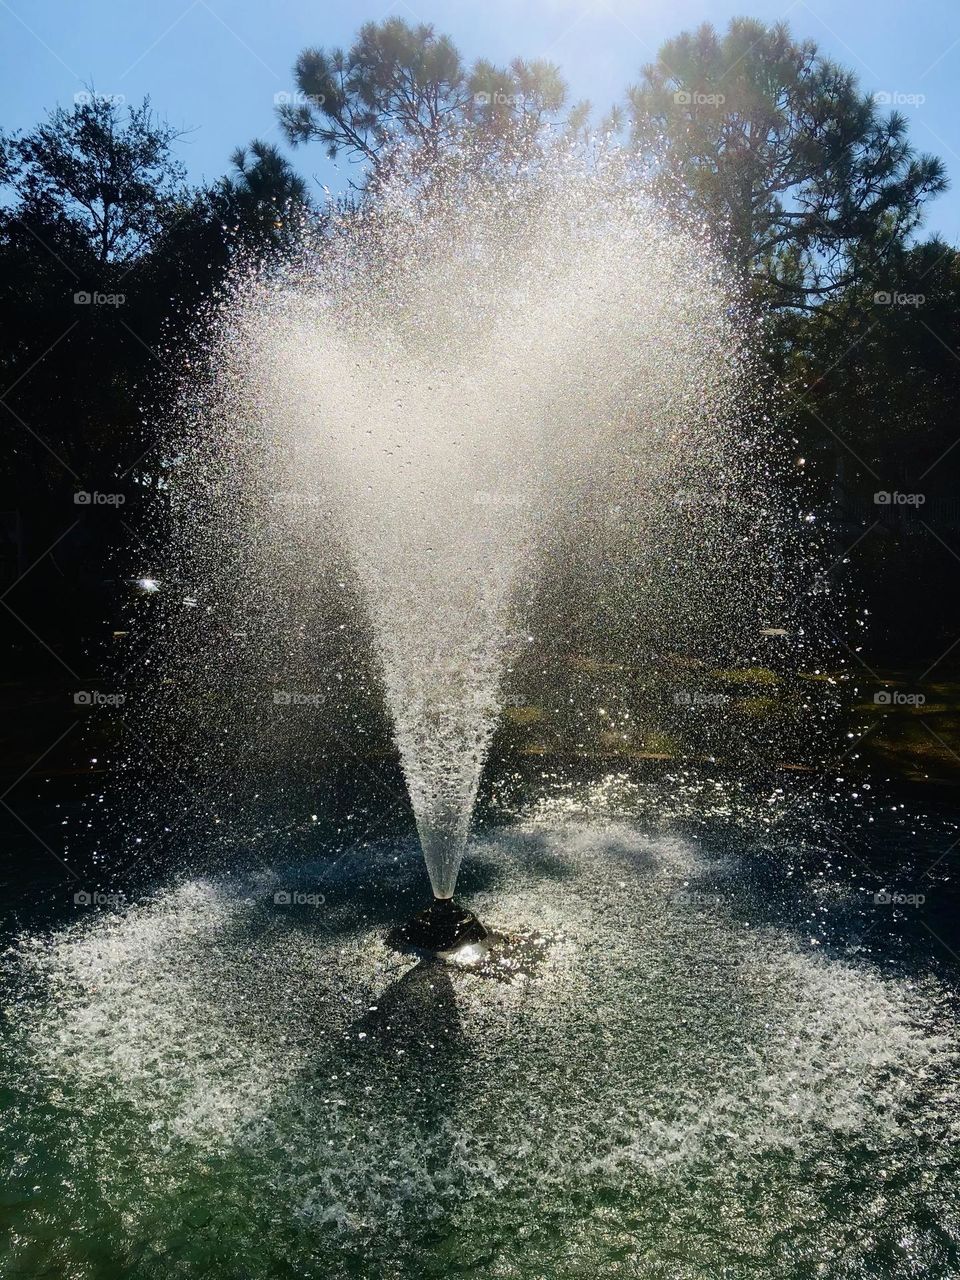 Sunlight through the spray of a fountain in a city park. Everyday beauty outdoors.